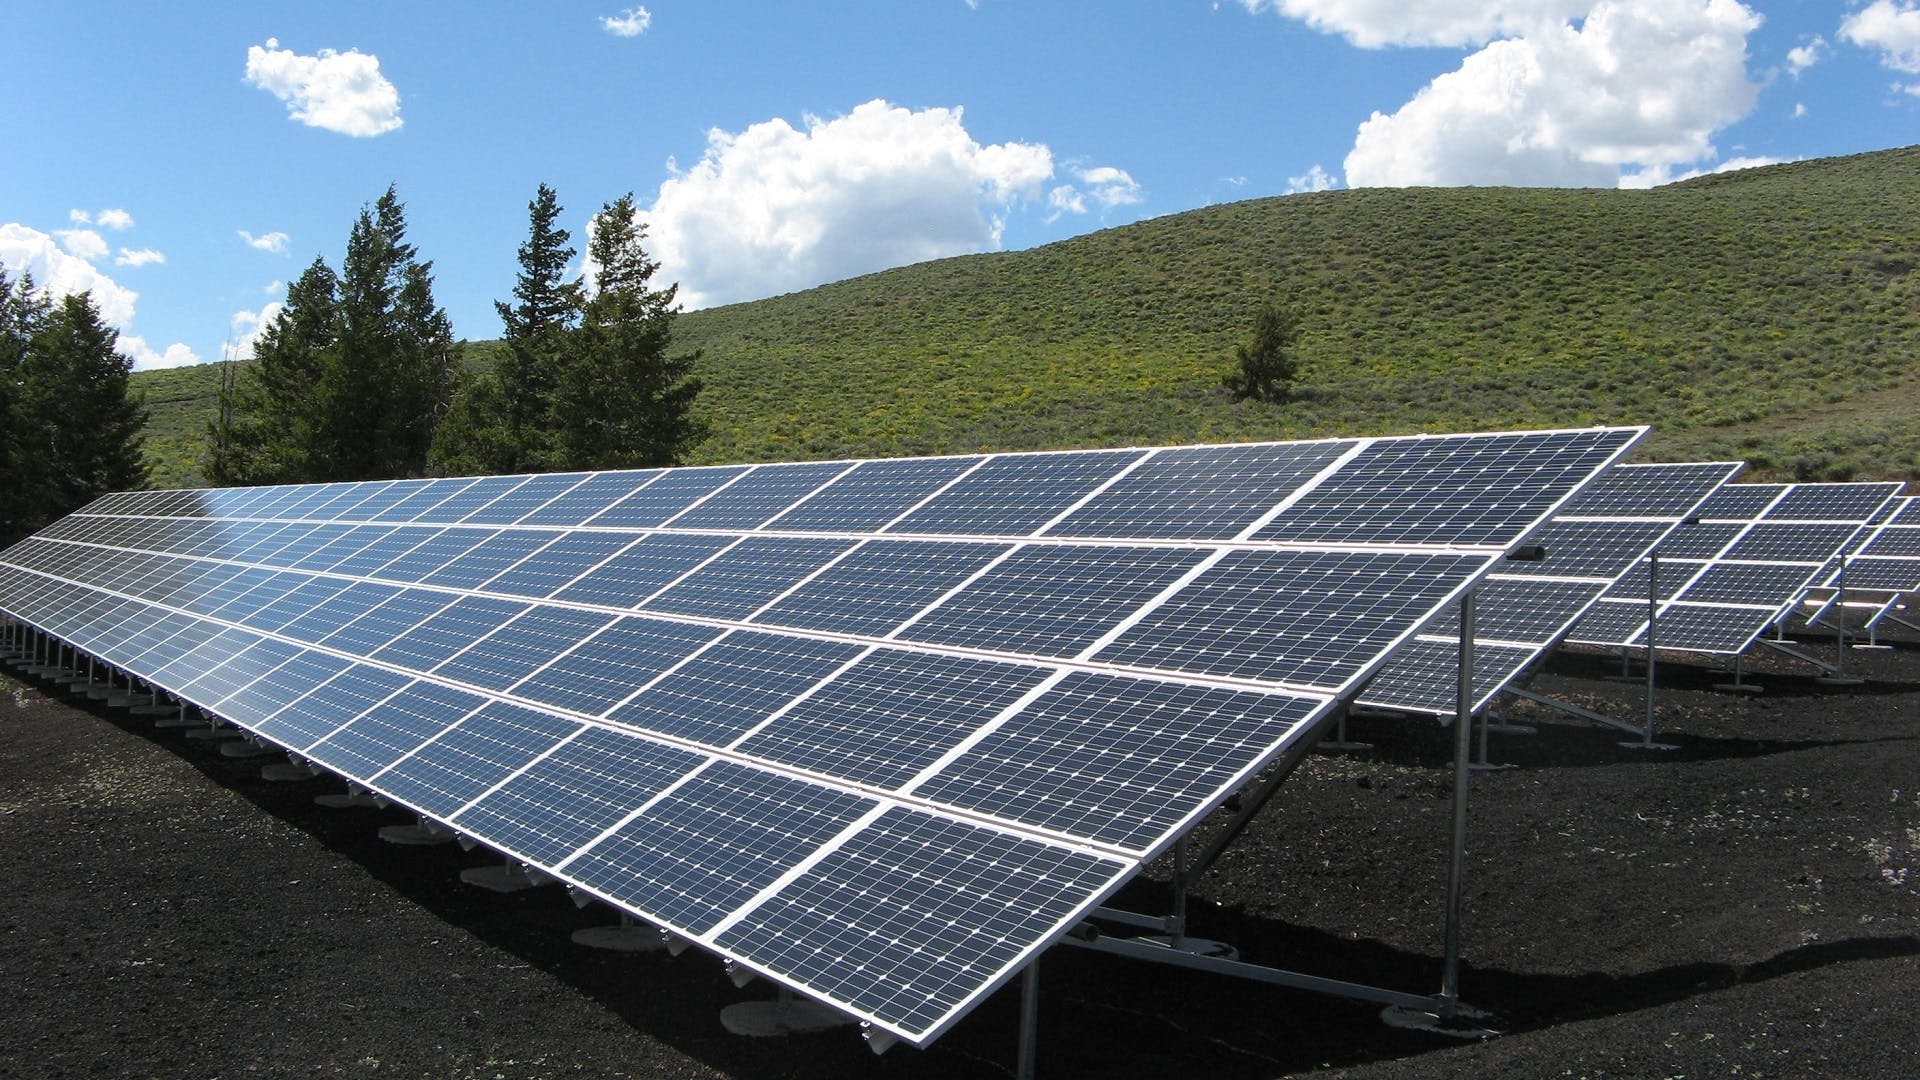 148398_solar-panel-array-power-sun-electricity-159397.jpeg